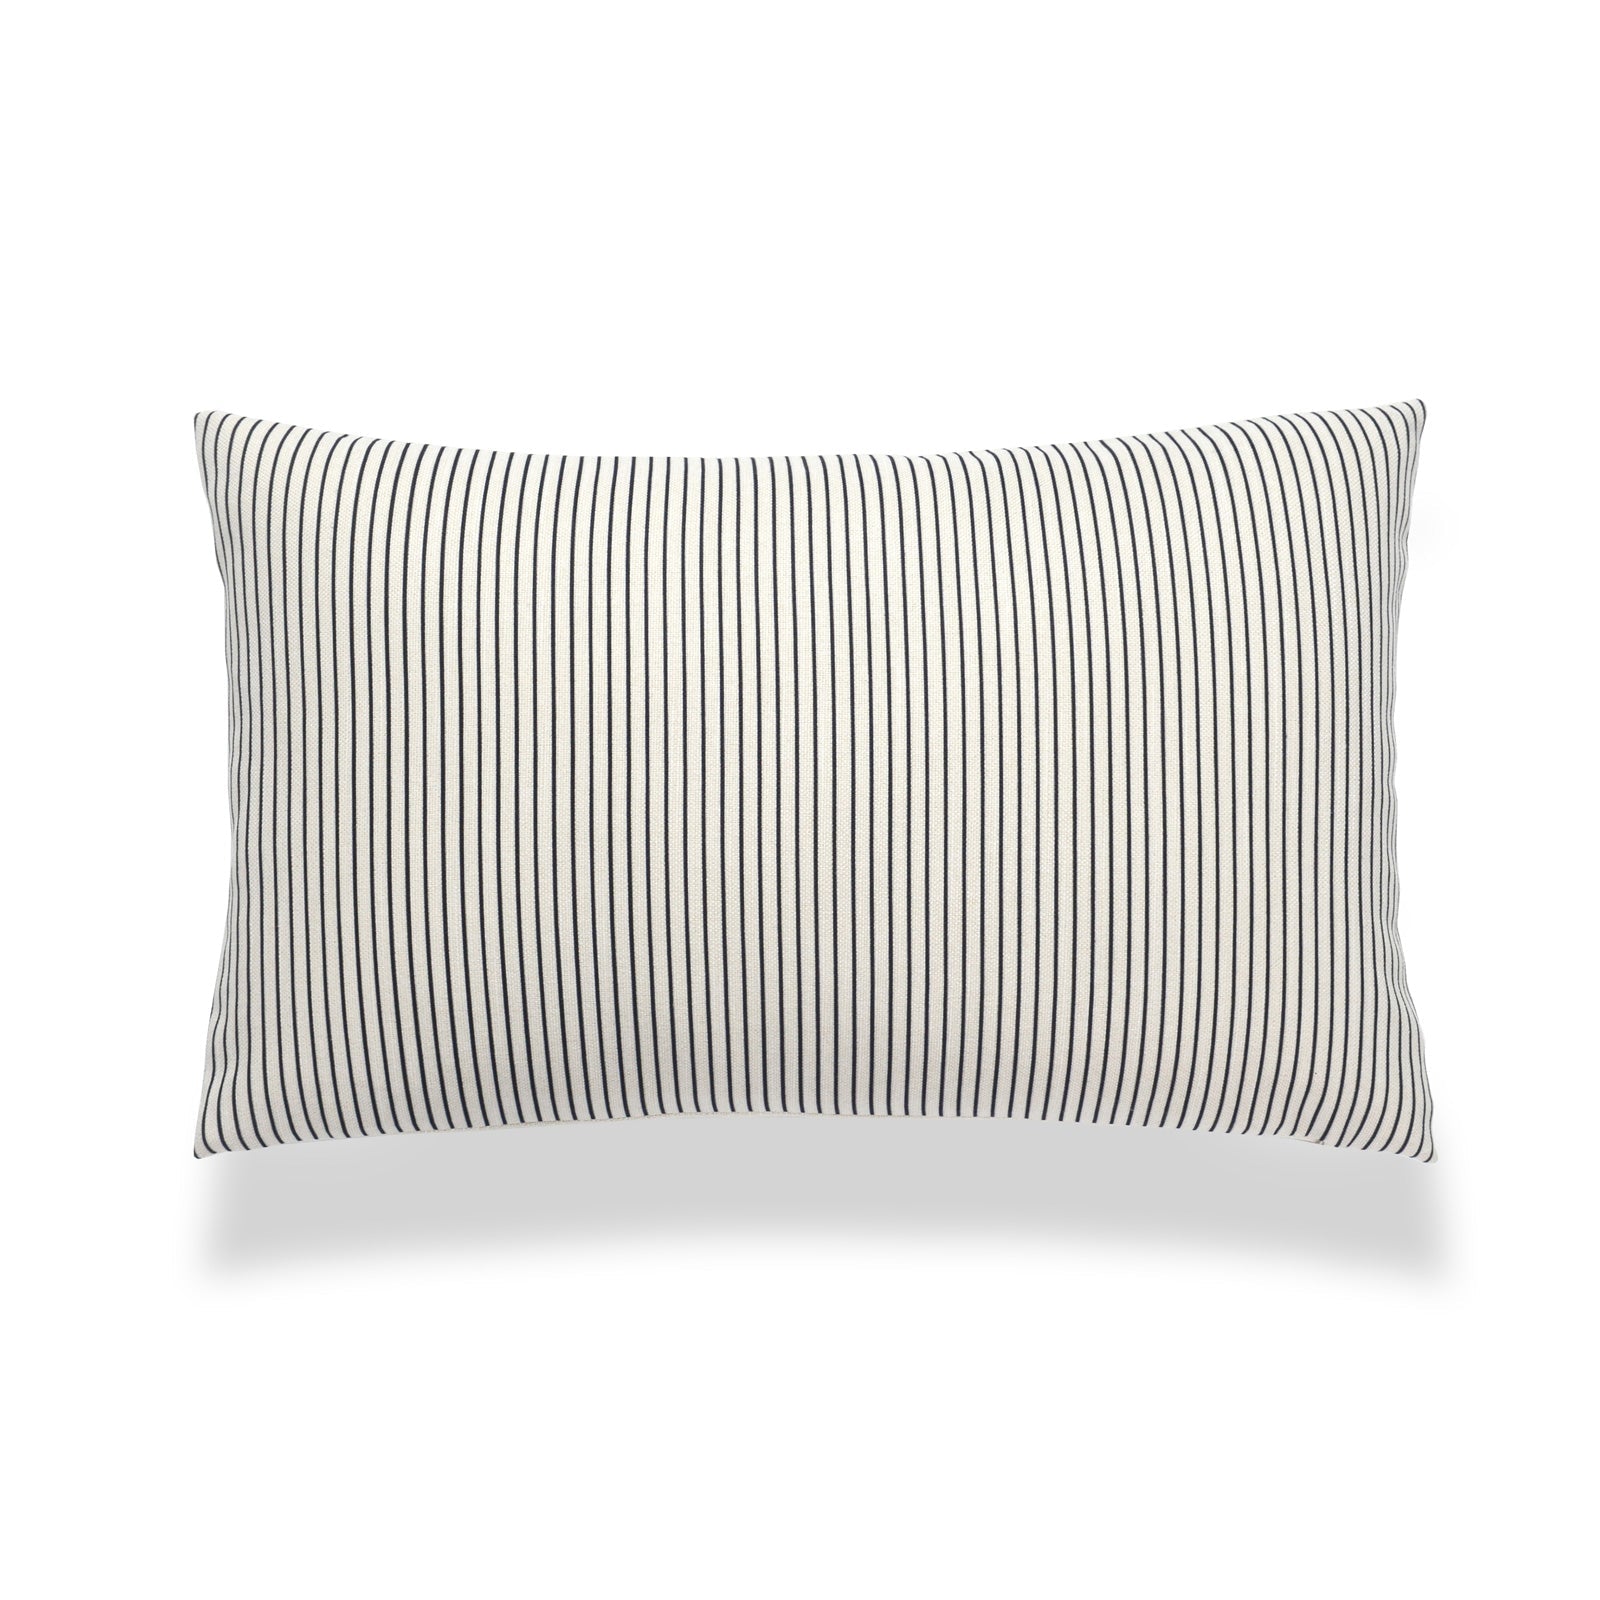 Neutral Lumbar Pillow Cover, Ticking Stripes, Black Beige, 12"x20"